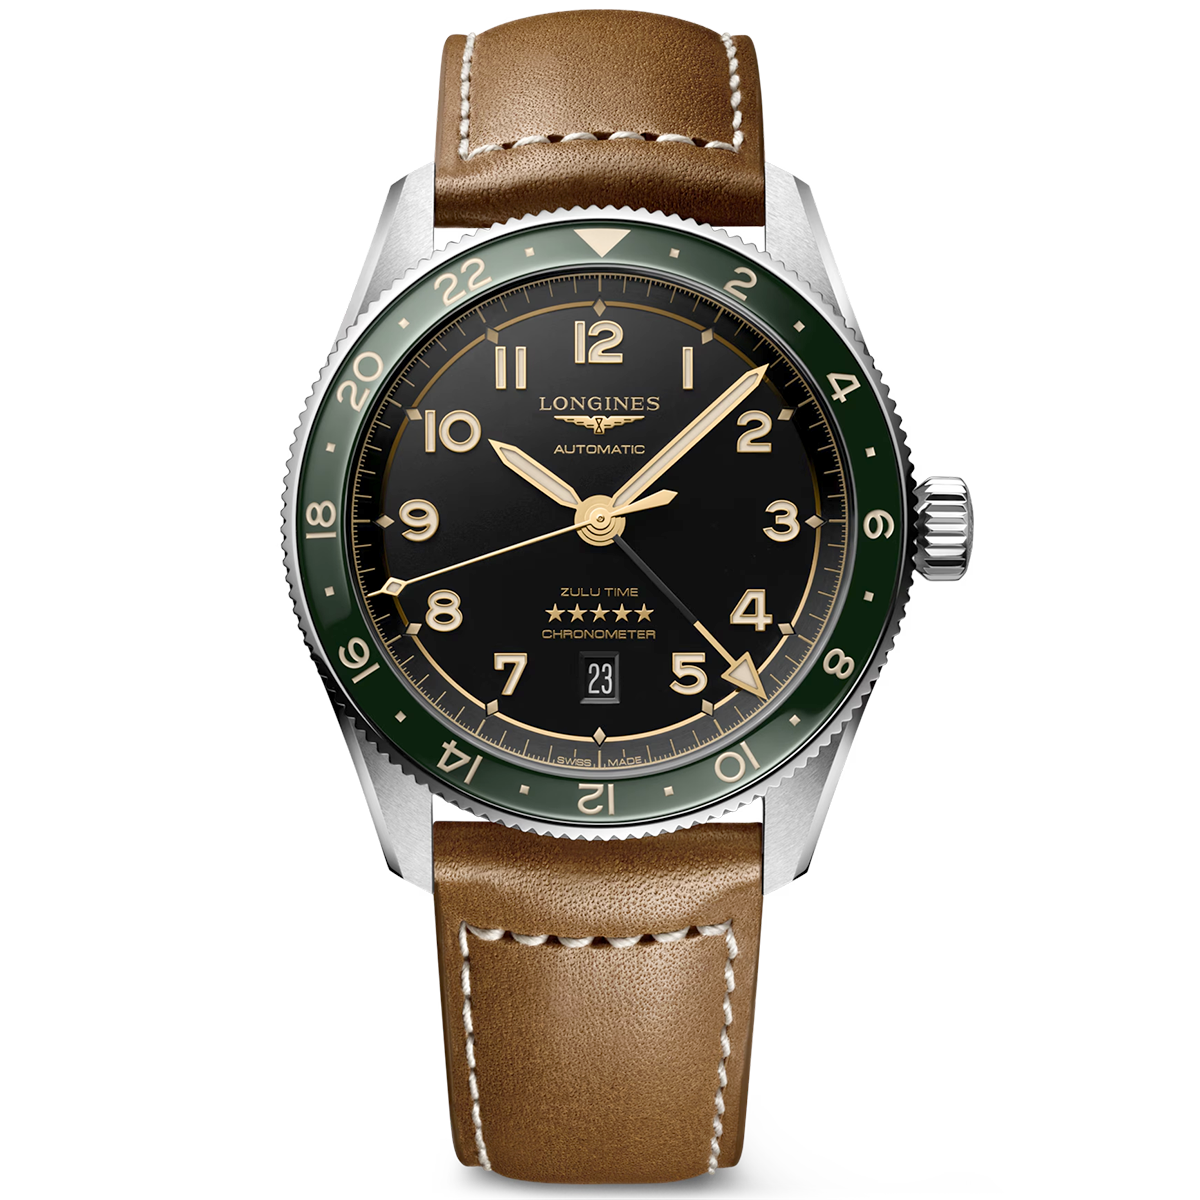 Spirit Zulu Time 42mm Black/Gold Dial Men's Leather Strap Watch